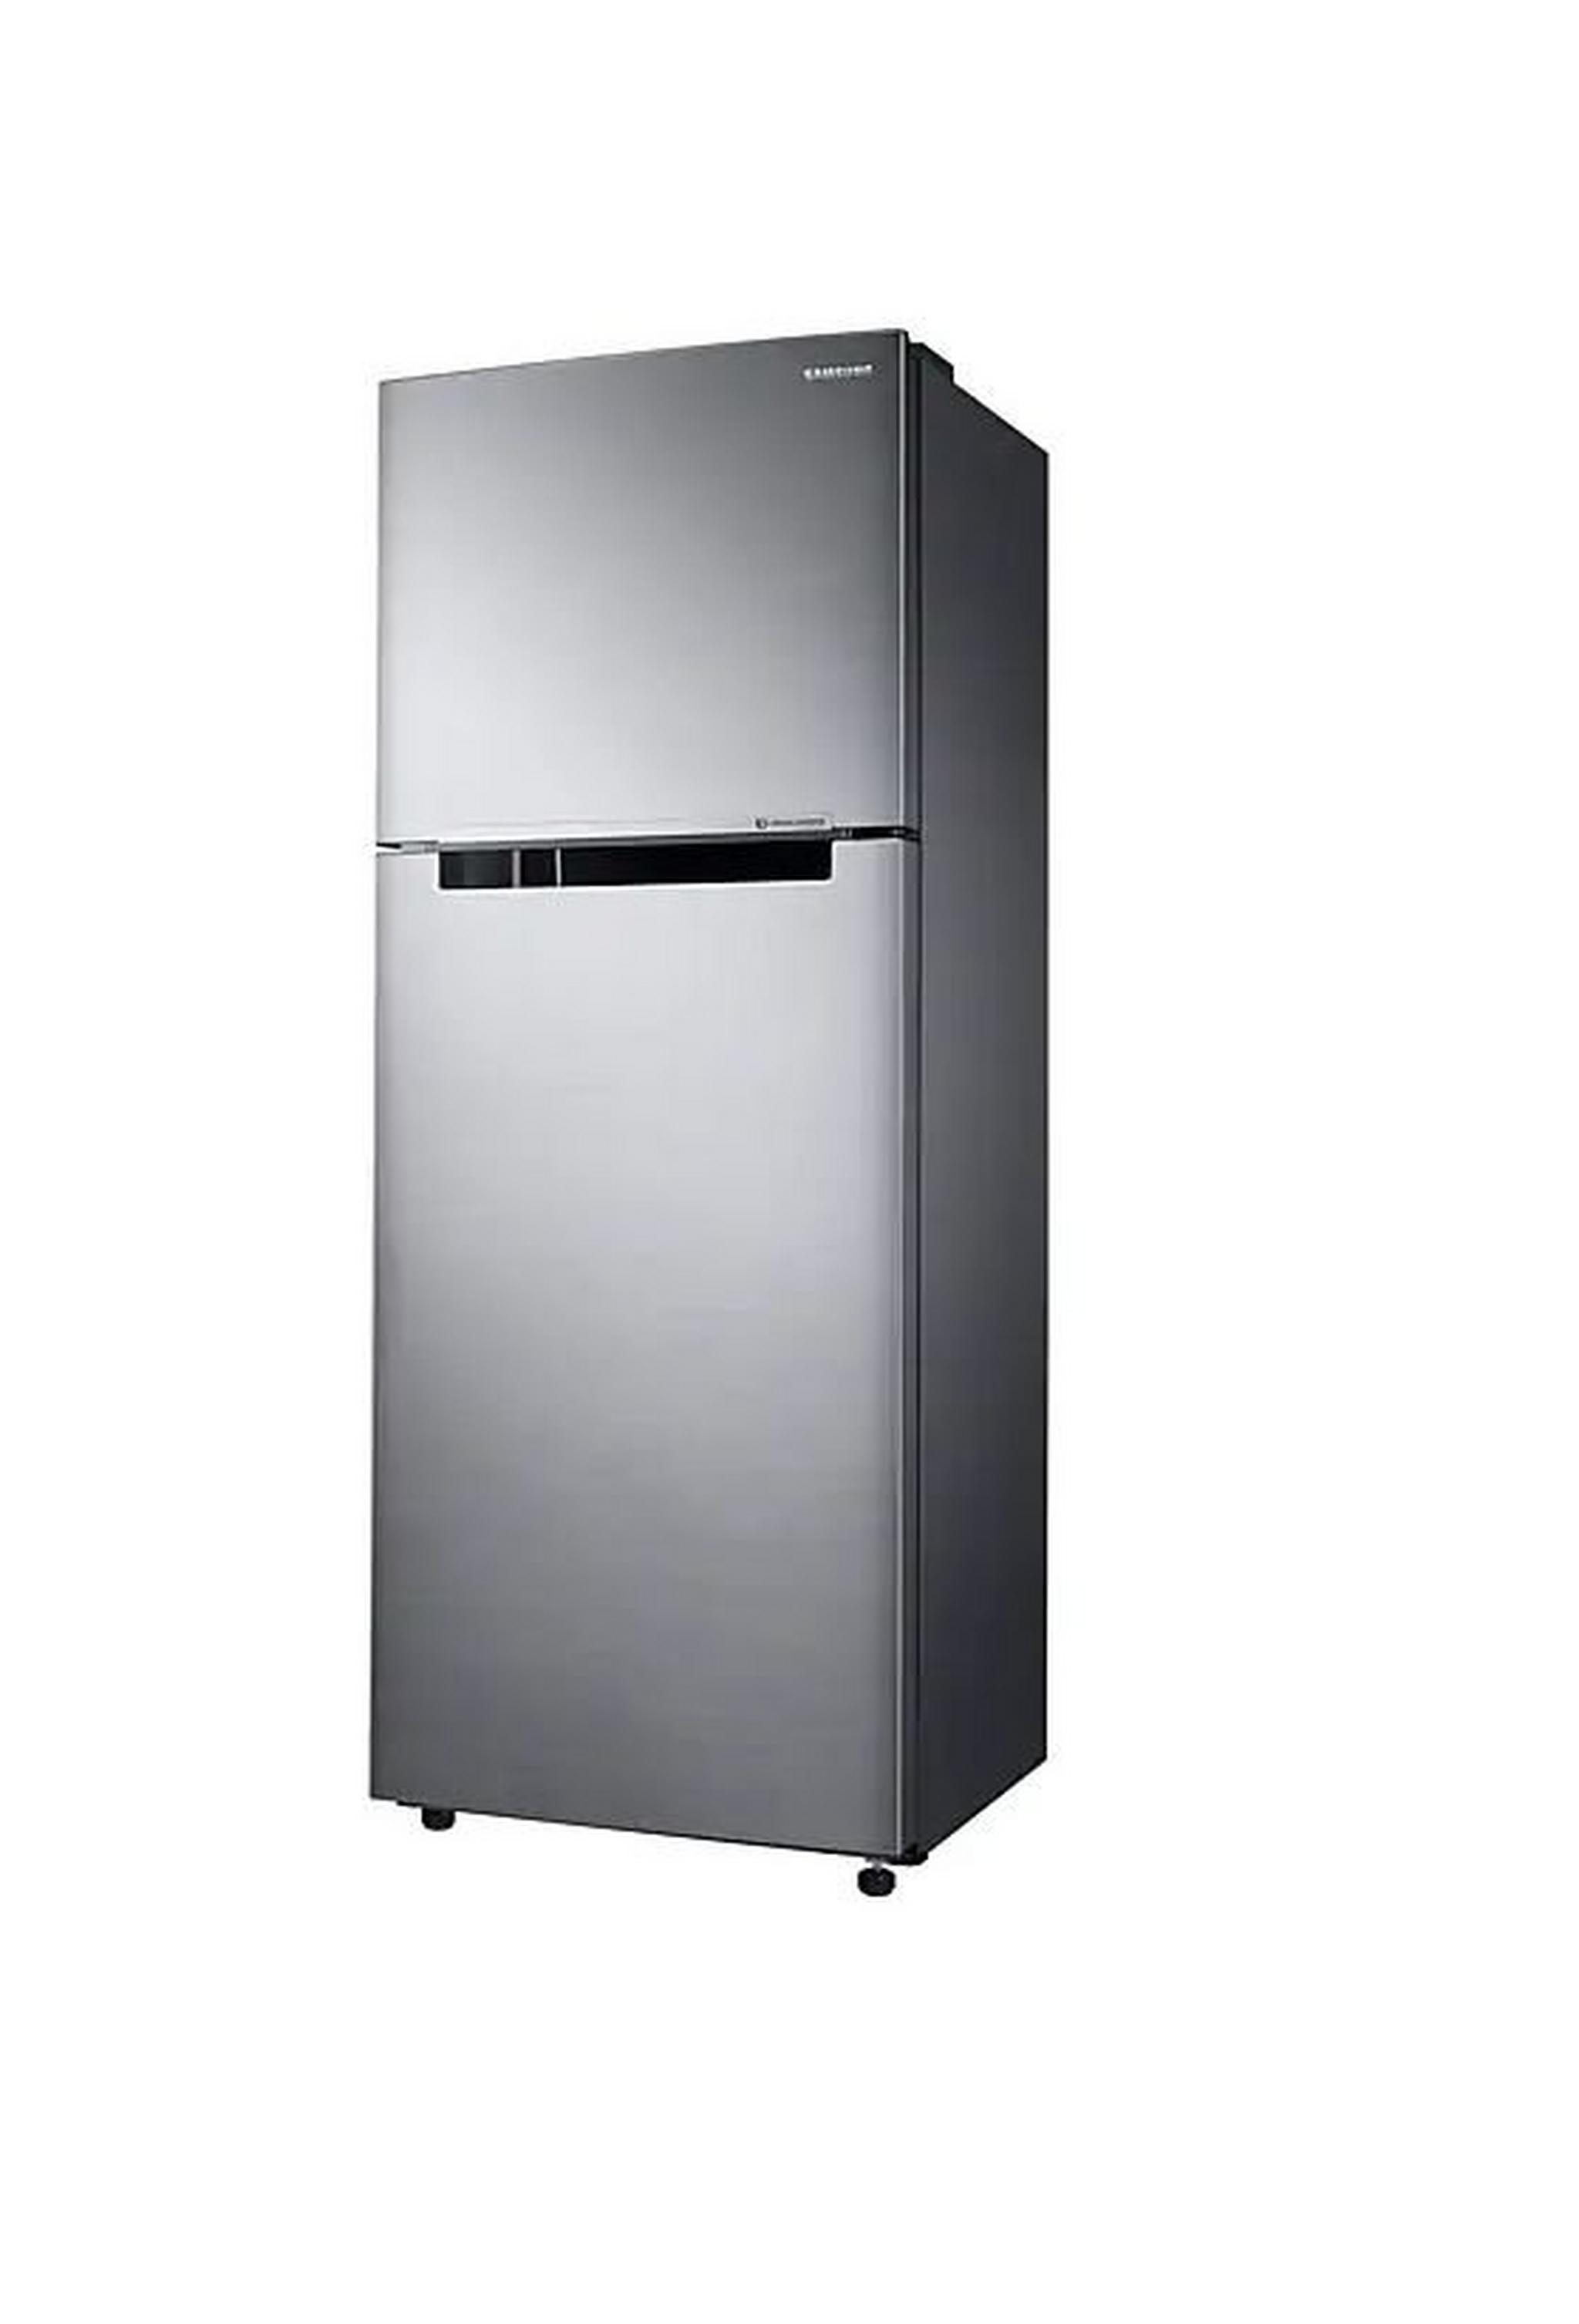 Samsung 18CFT Top Mount Refrigerator (RT50K5030S8) - Inox